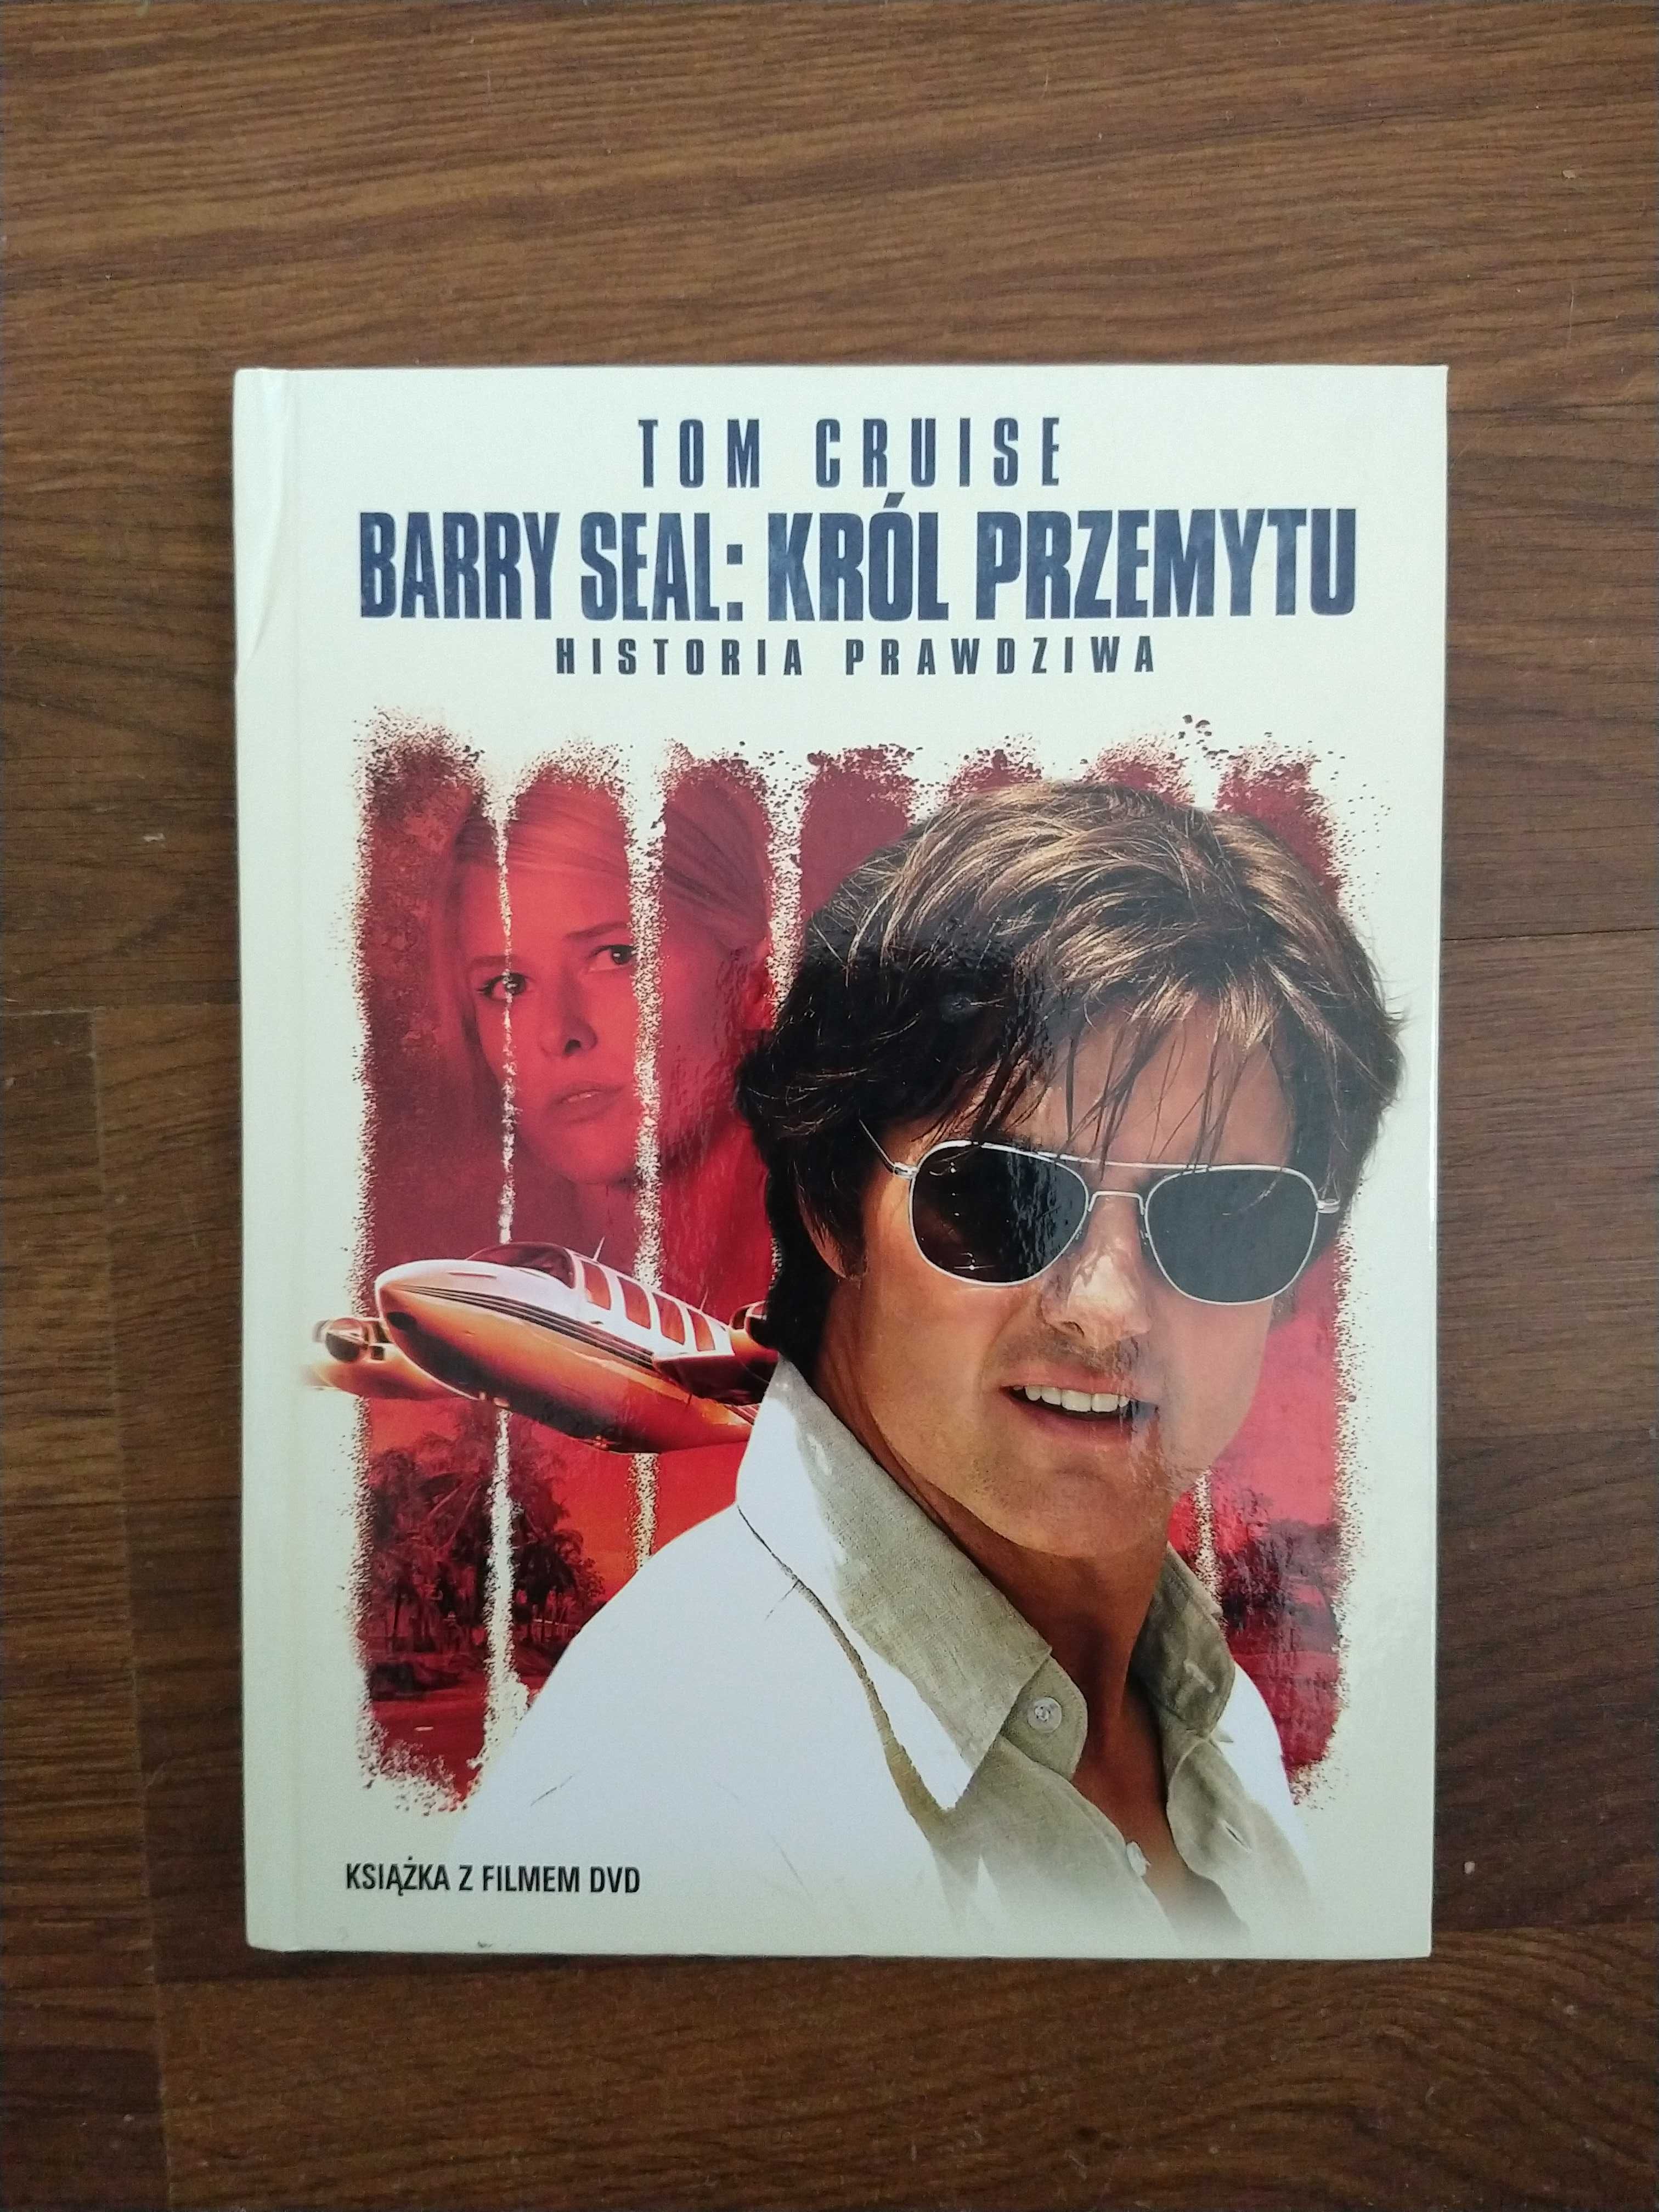 Film na DVD - "Barry Seal. Król przemytu"